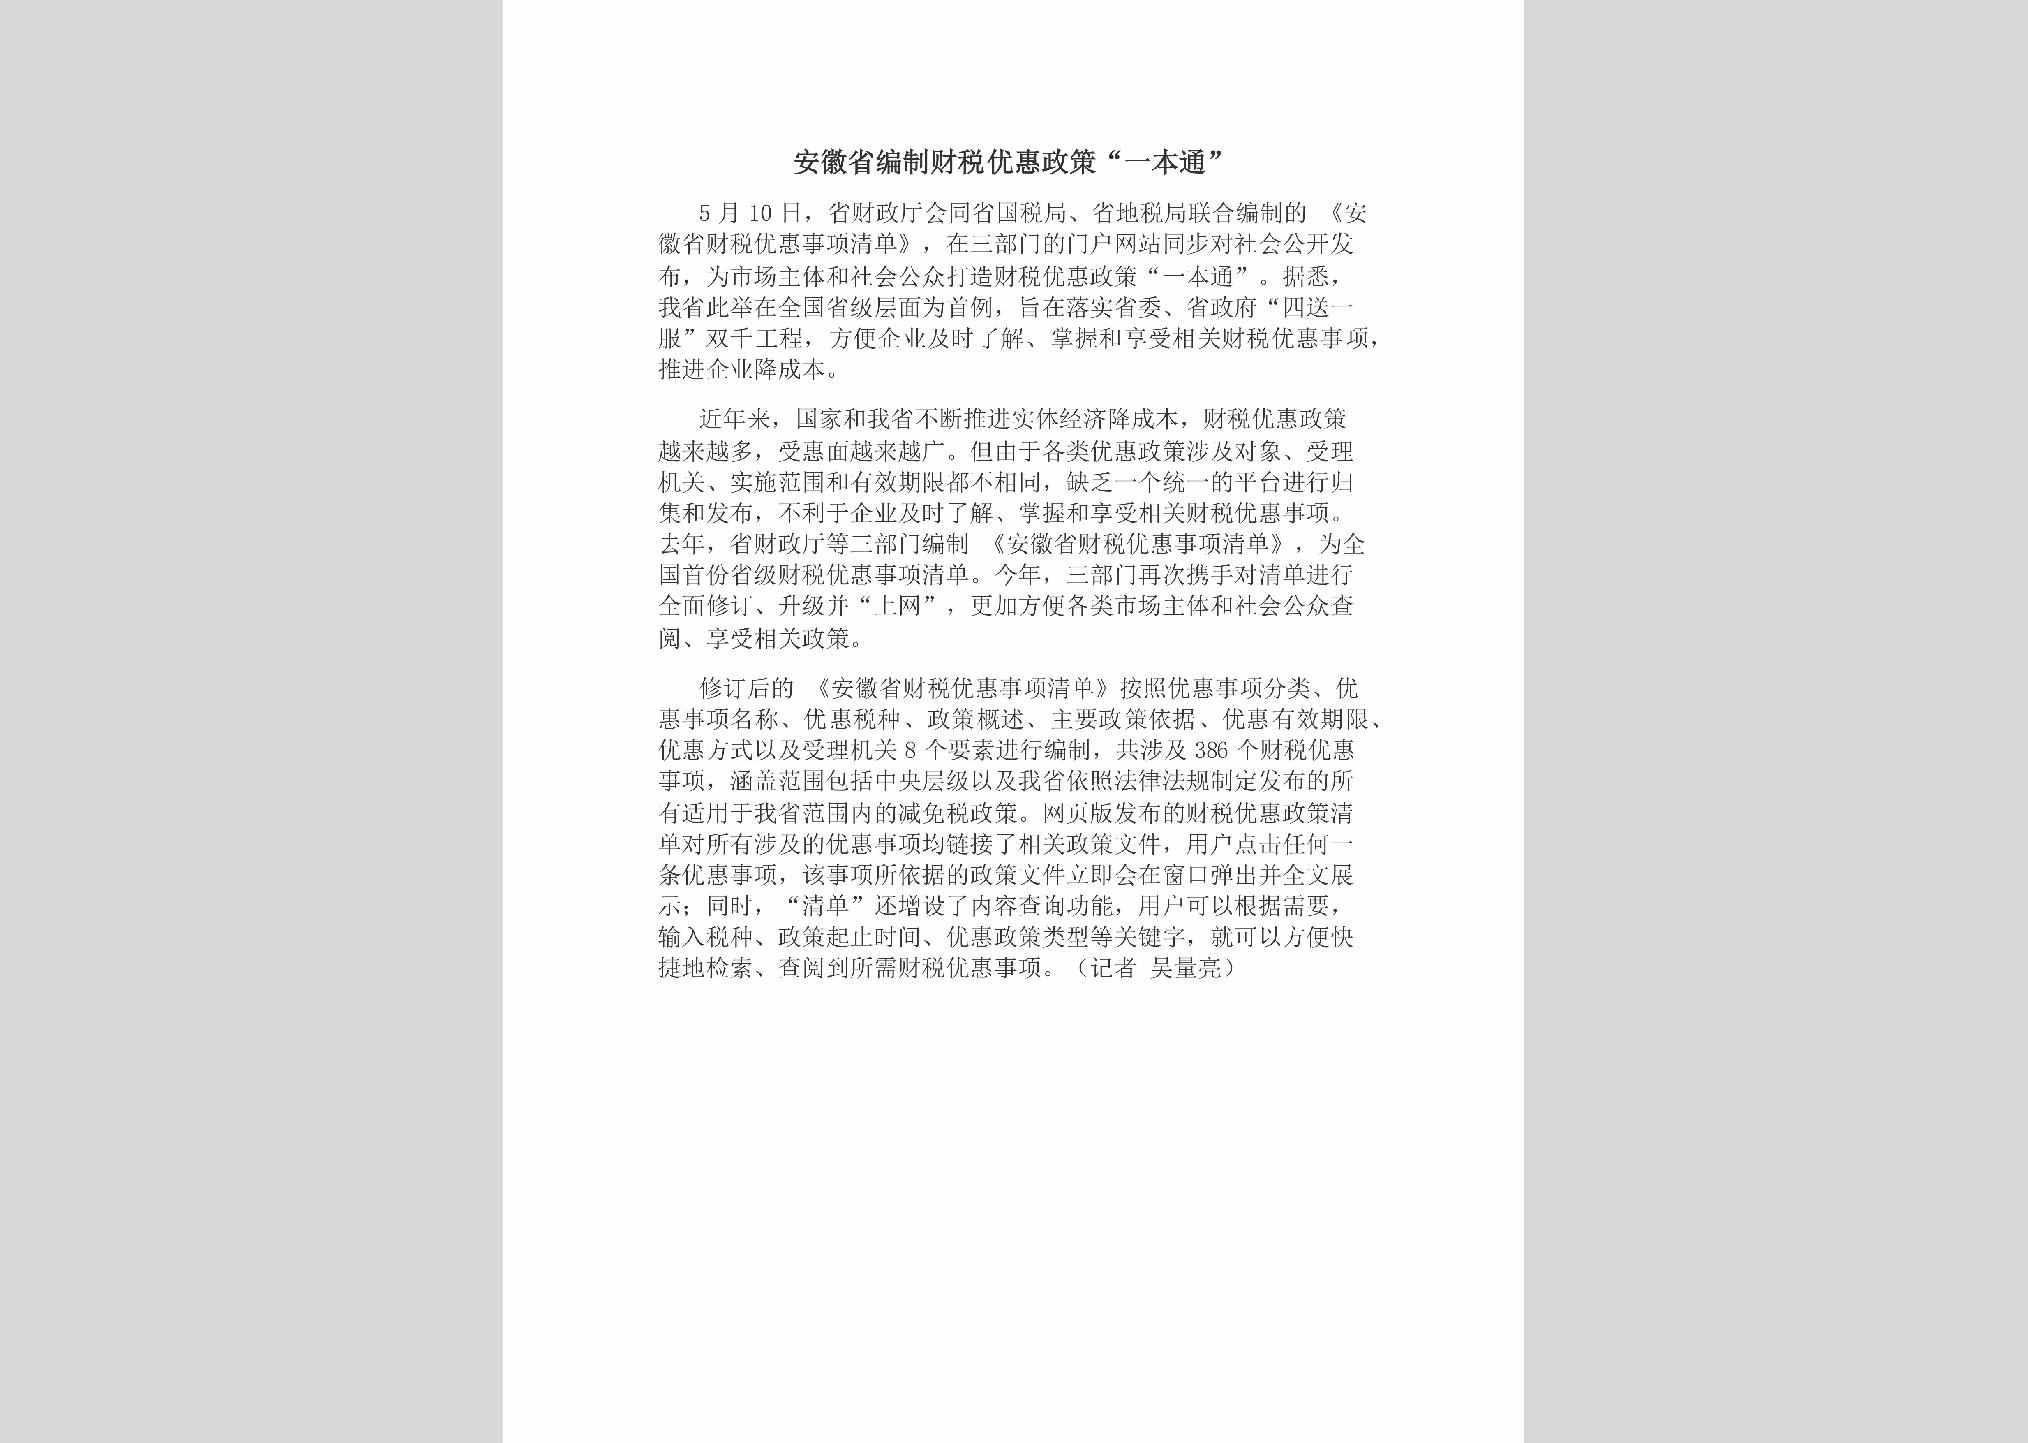 AH-BZCSYHZC-2018：安徽省编制财税优惠政策“一本通”